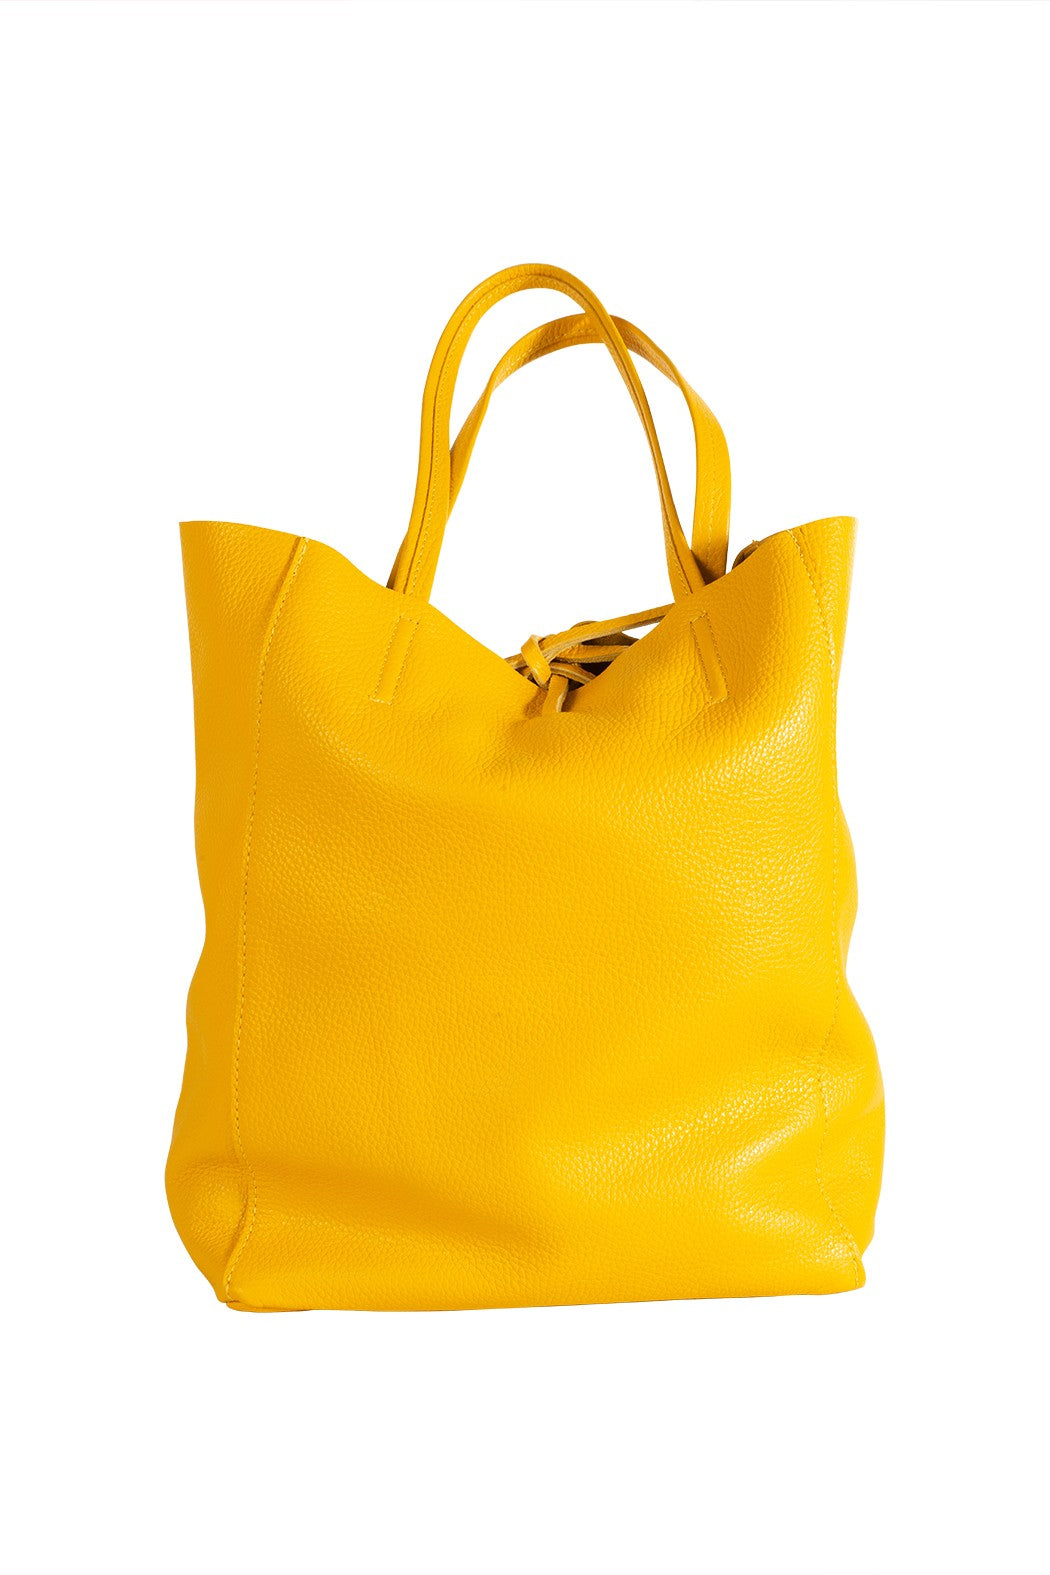 Italian leather shopper tote bag tie top yellow